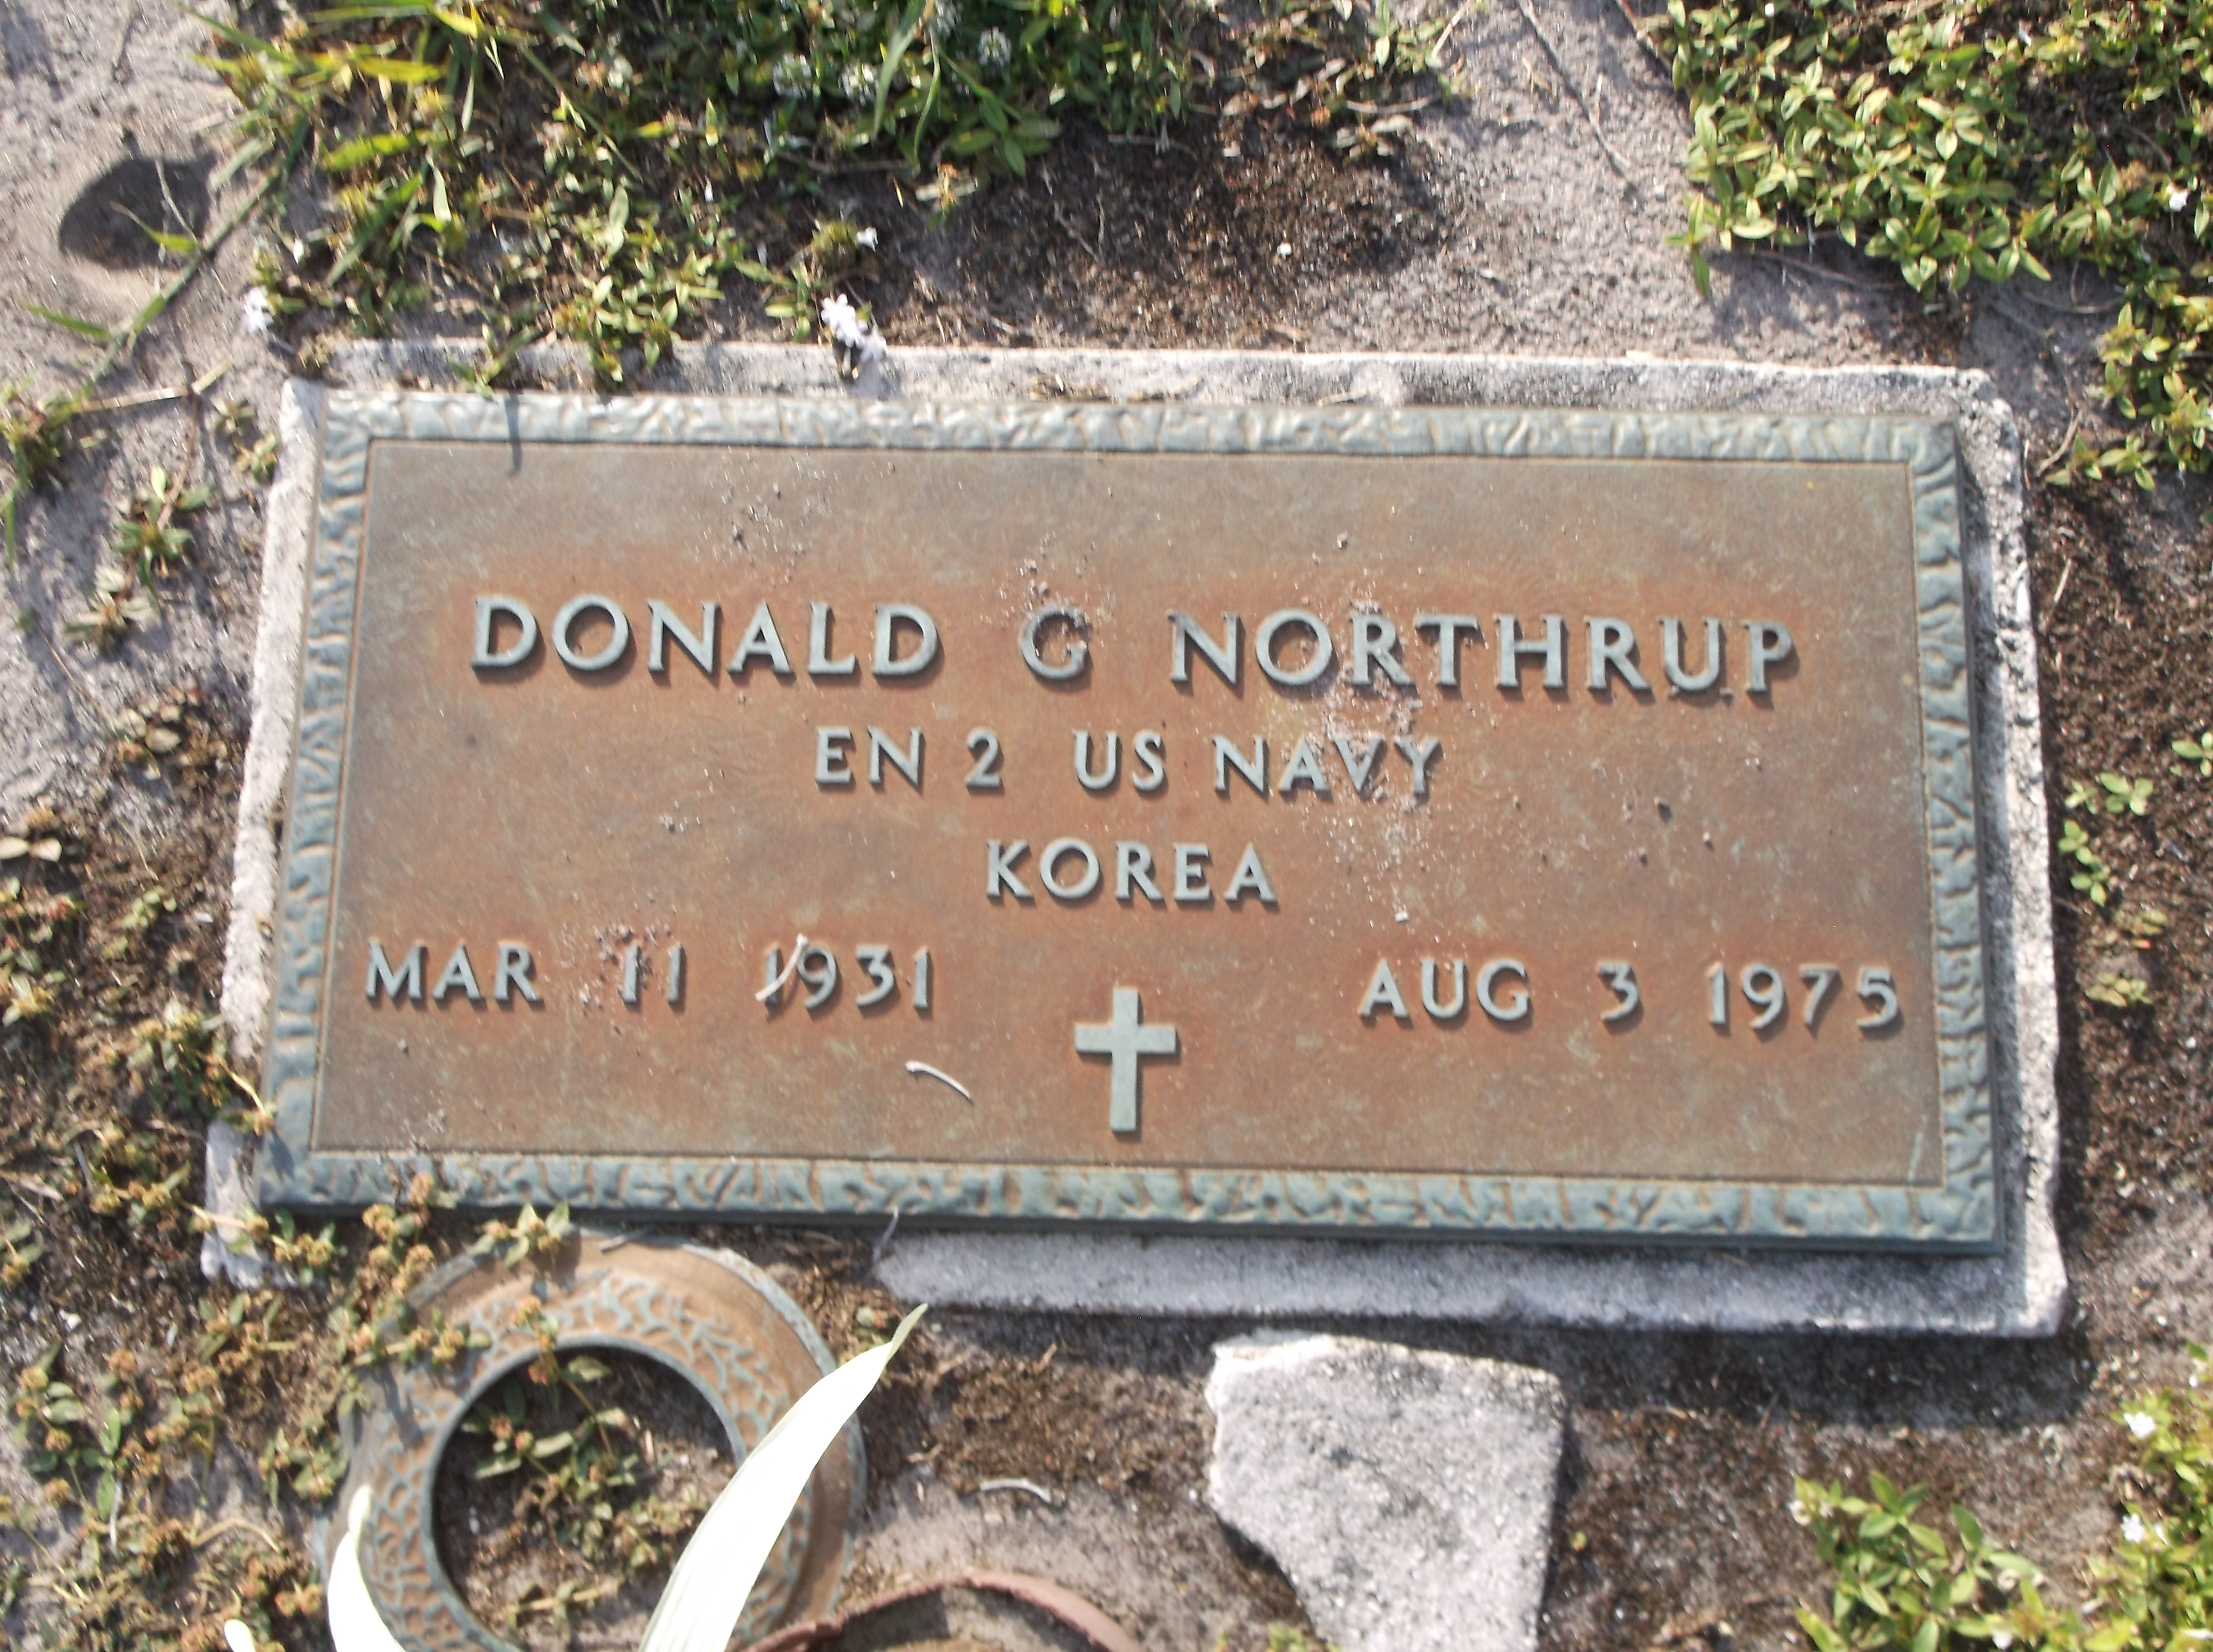 Donald G Northrup